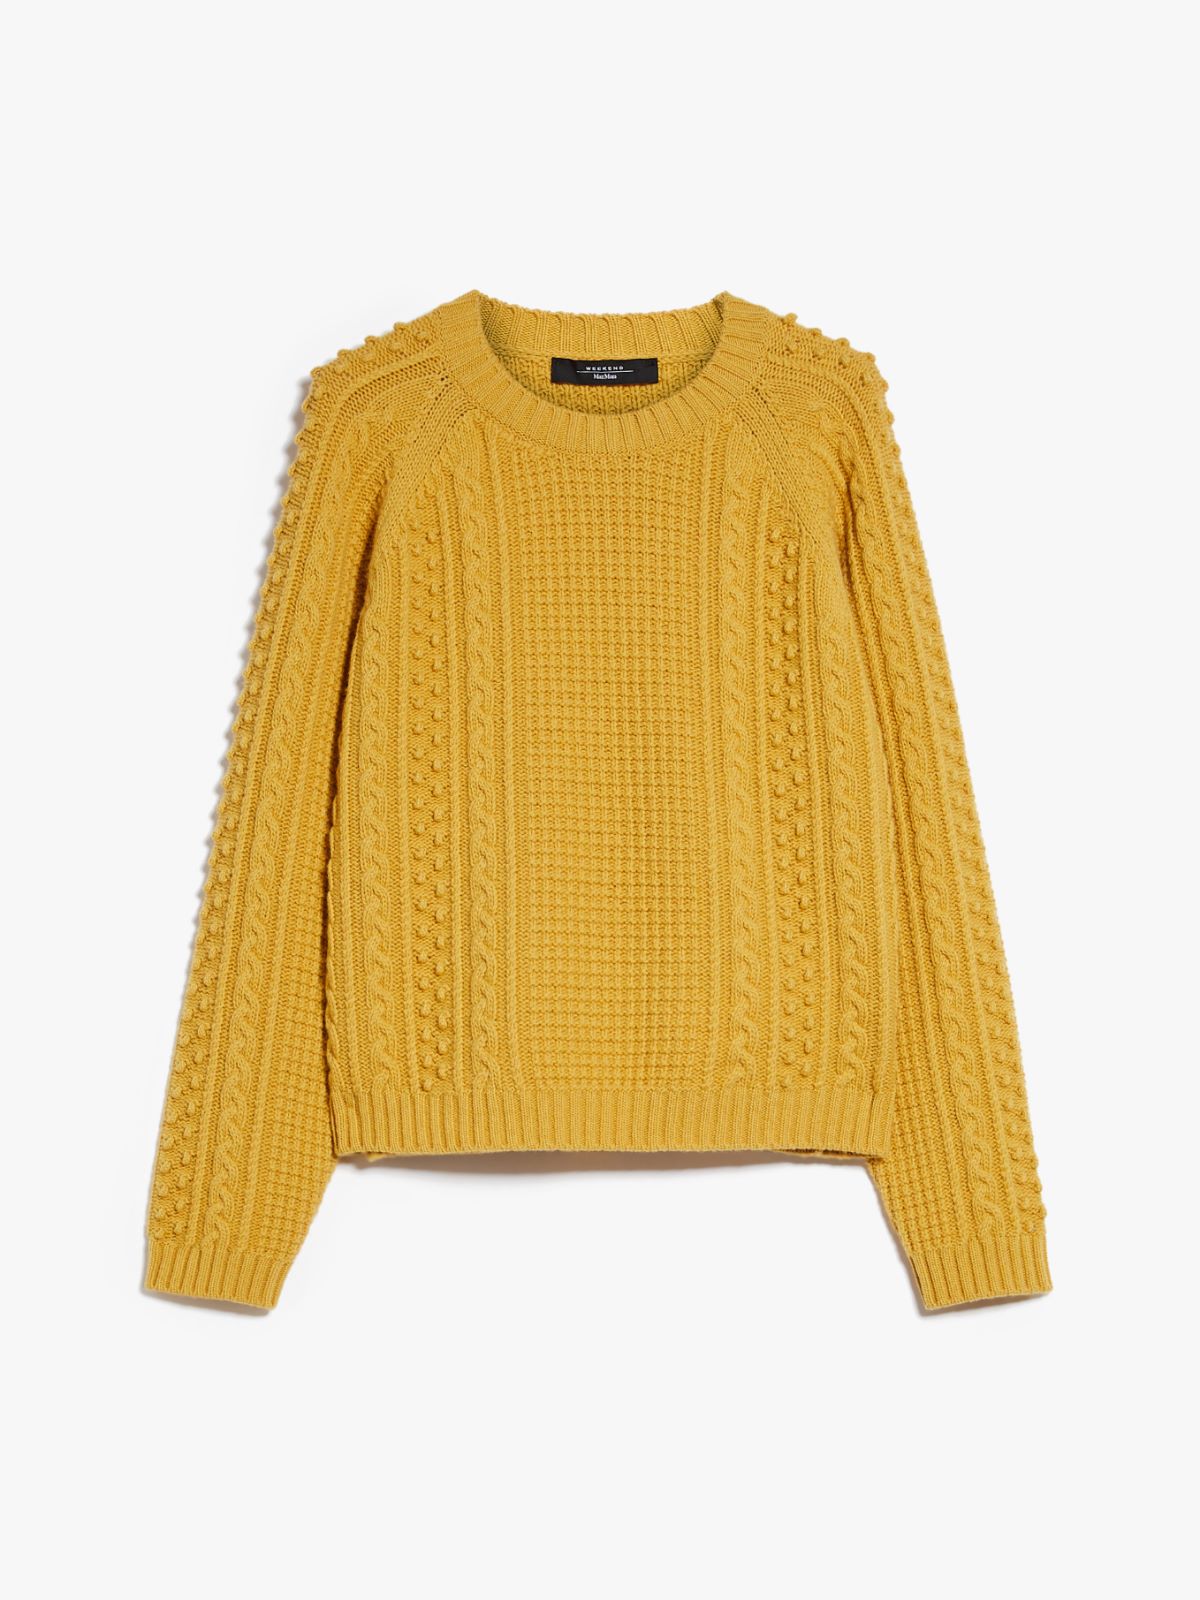 Wool yarn sweater, yellow | Weekend Max Mara